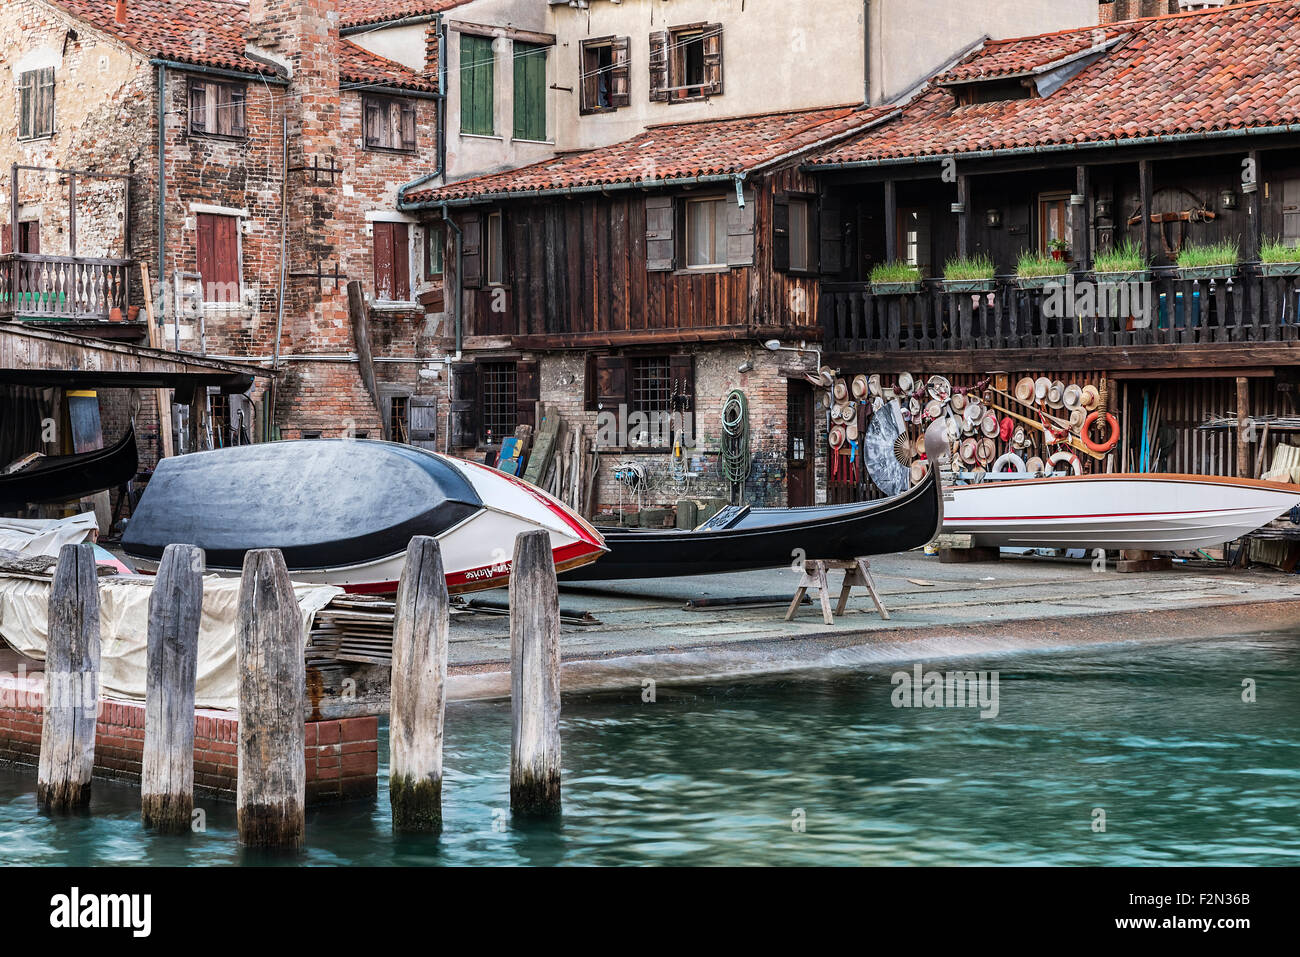 Le squero di San Trovaso gondola boatyard, Venise, Italie Banque D'Images